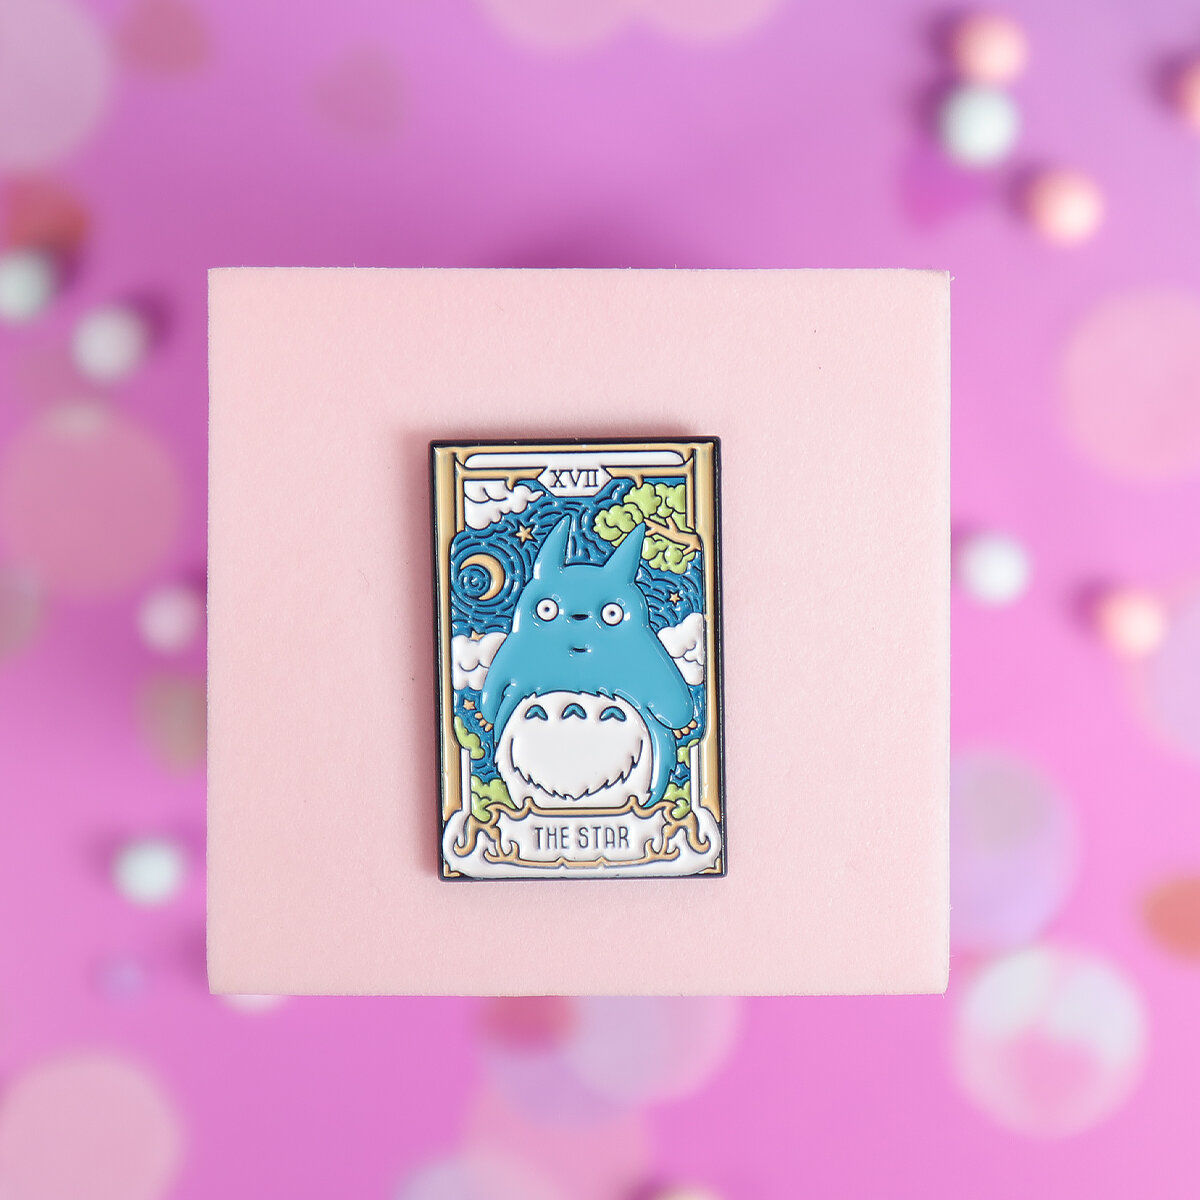 Pin - Totoro, the star